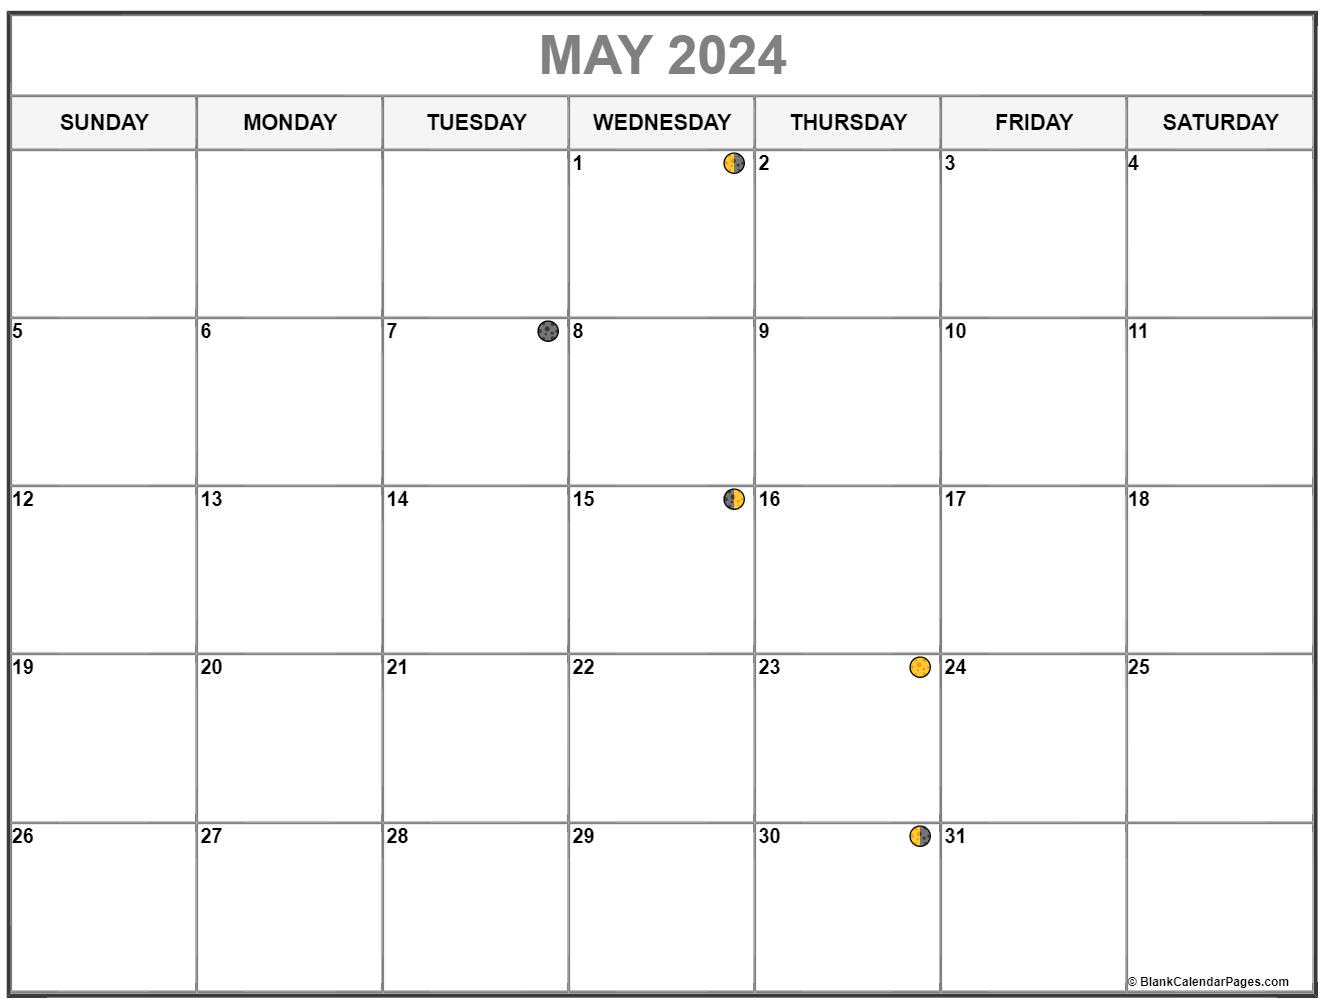 Full Moon May 2022 Calendar May 2022 Lunar Calendar | Moon Phase Calendar